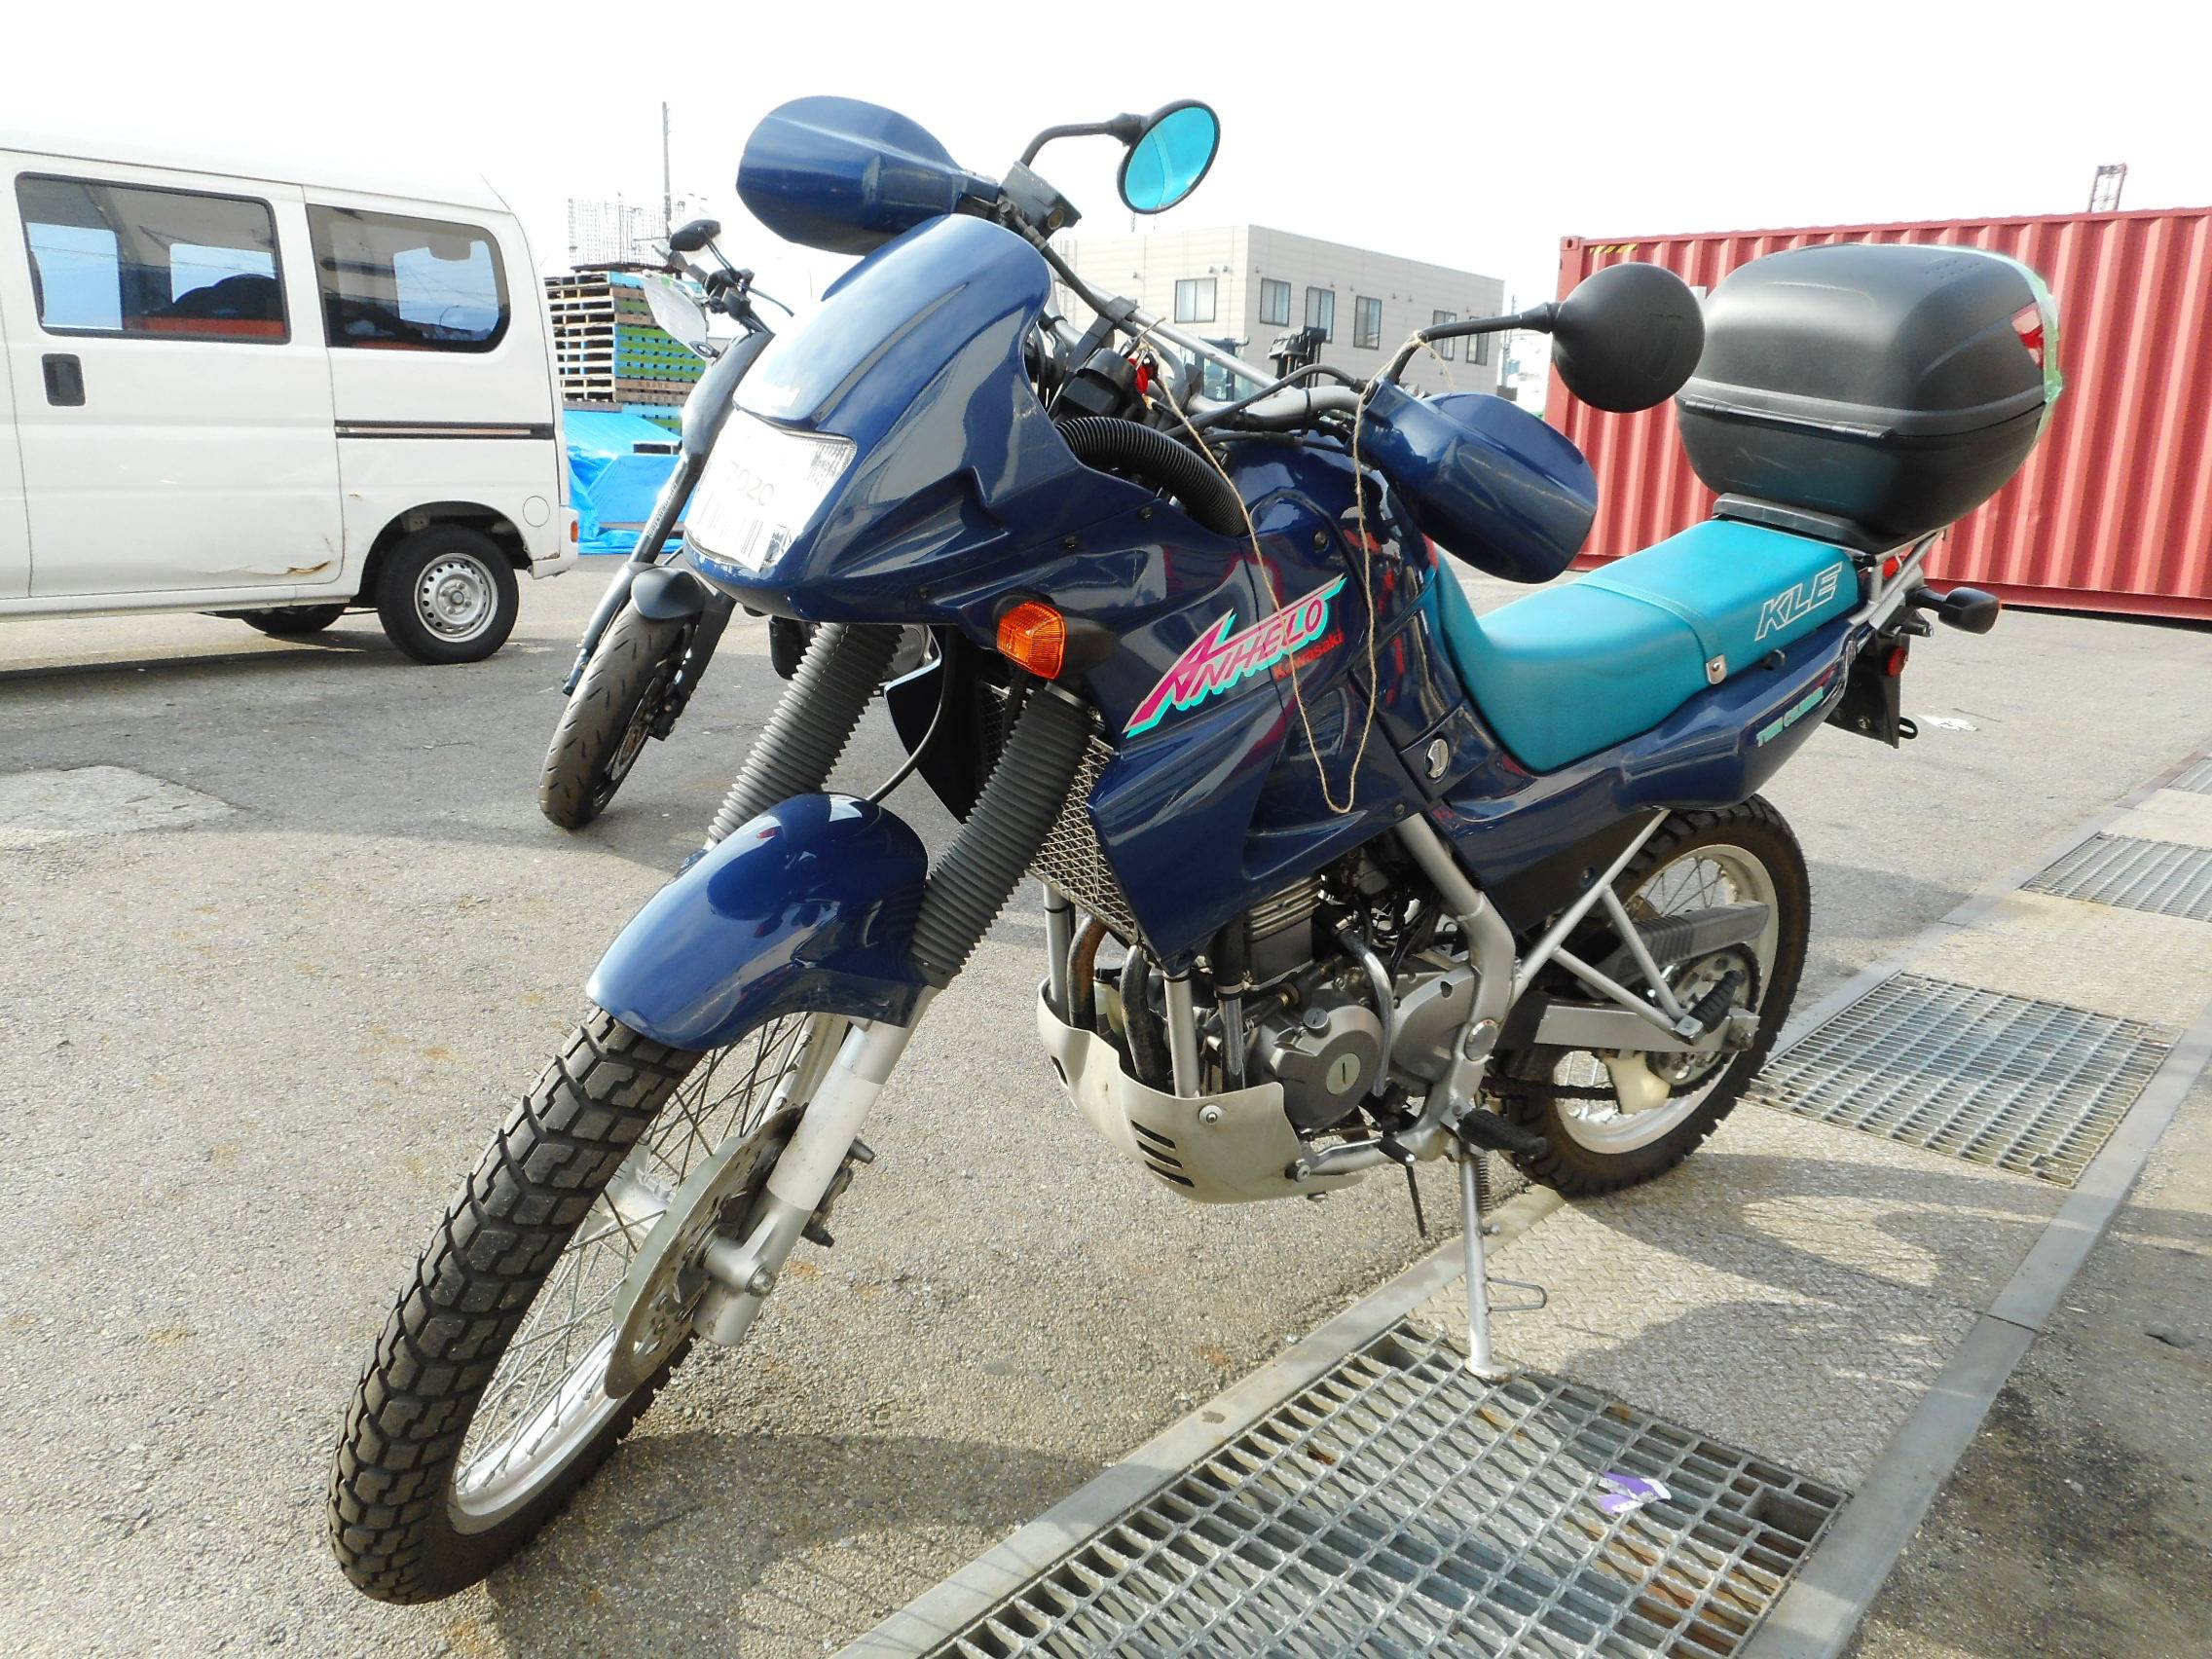 Kawasaki kle250: технические характеристики, фото anhelo, отзывы